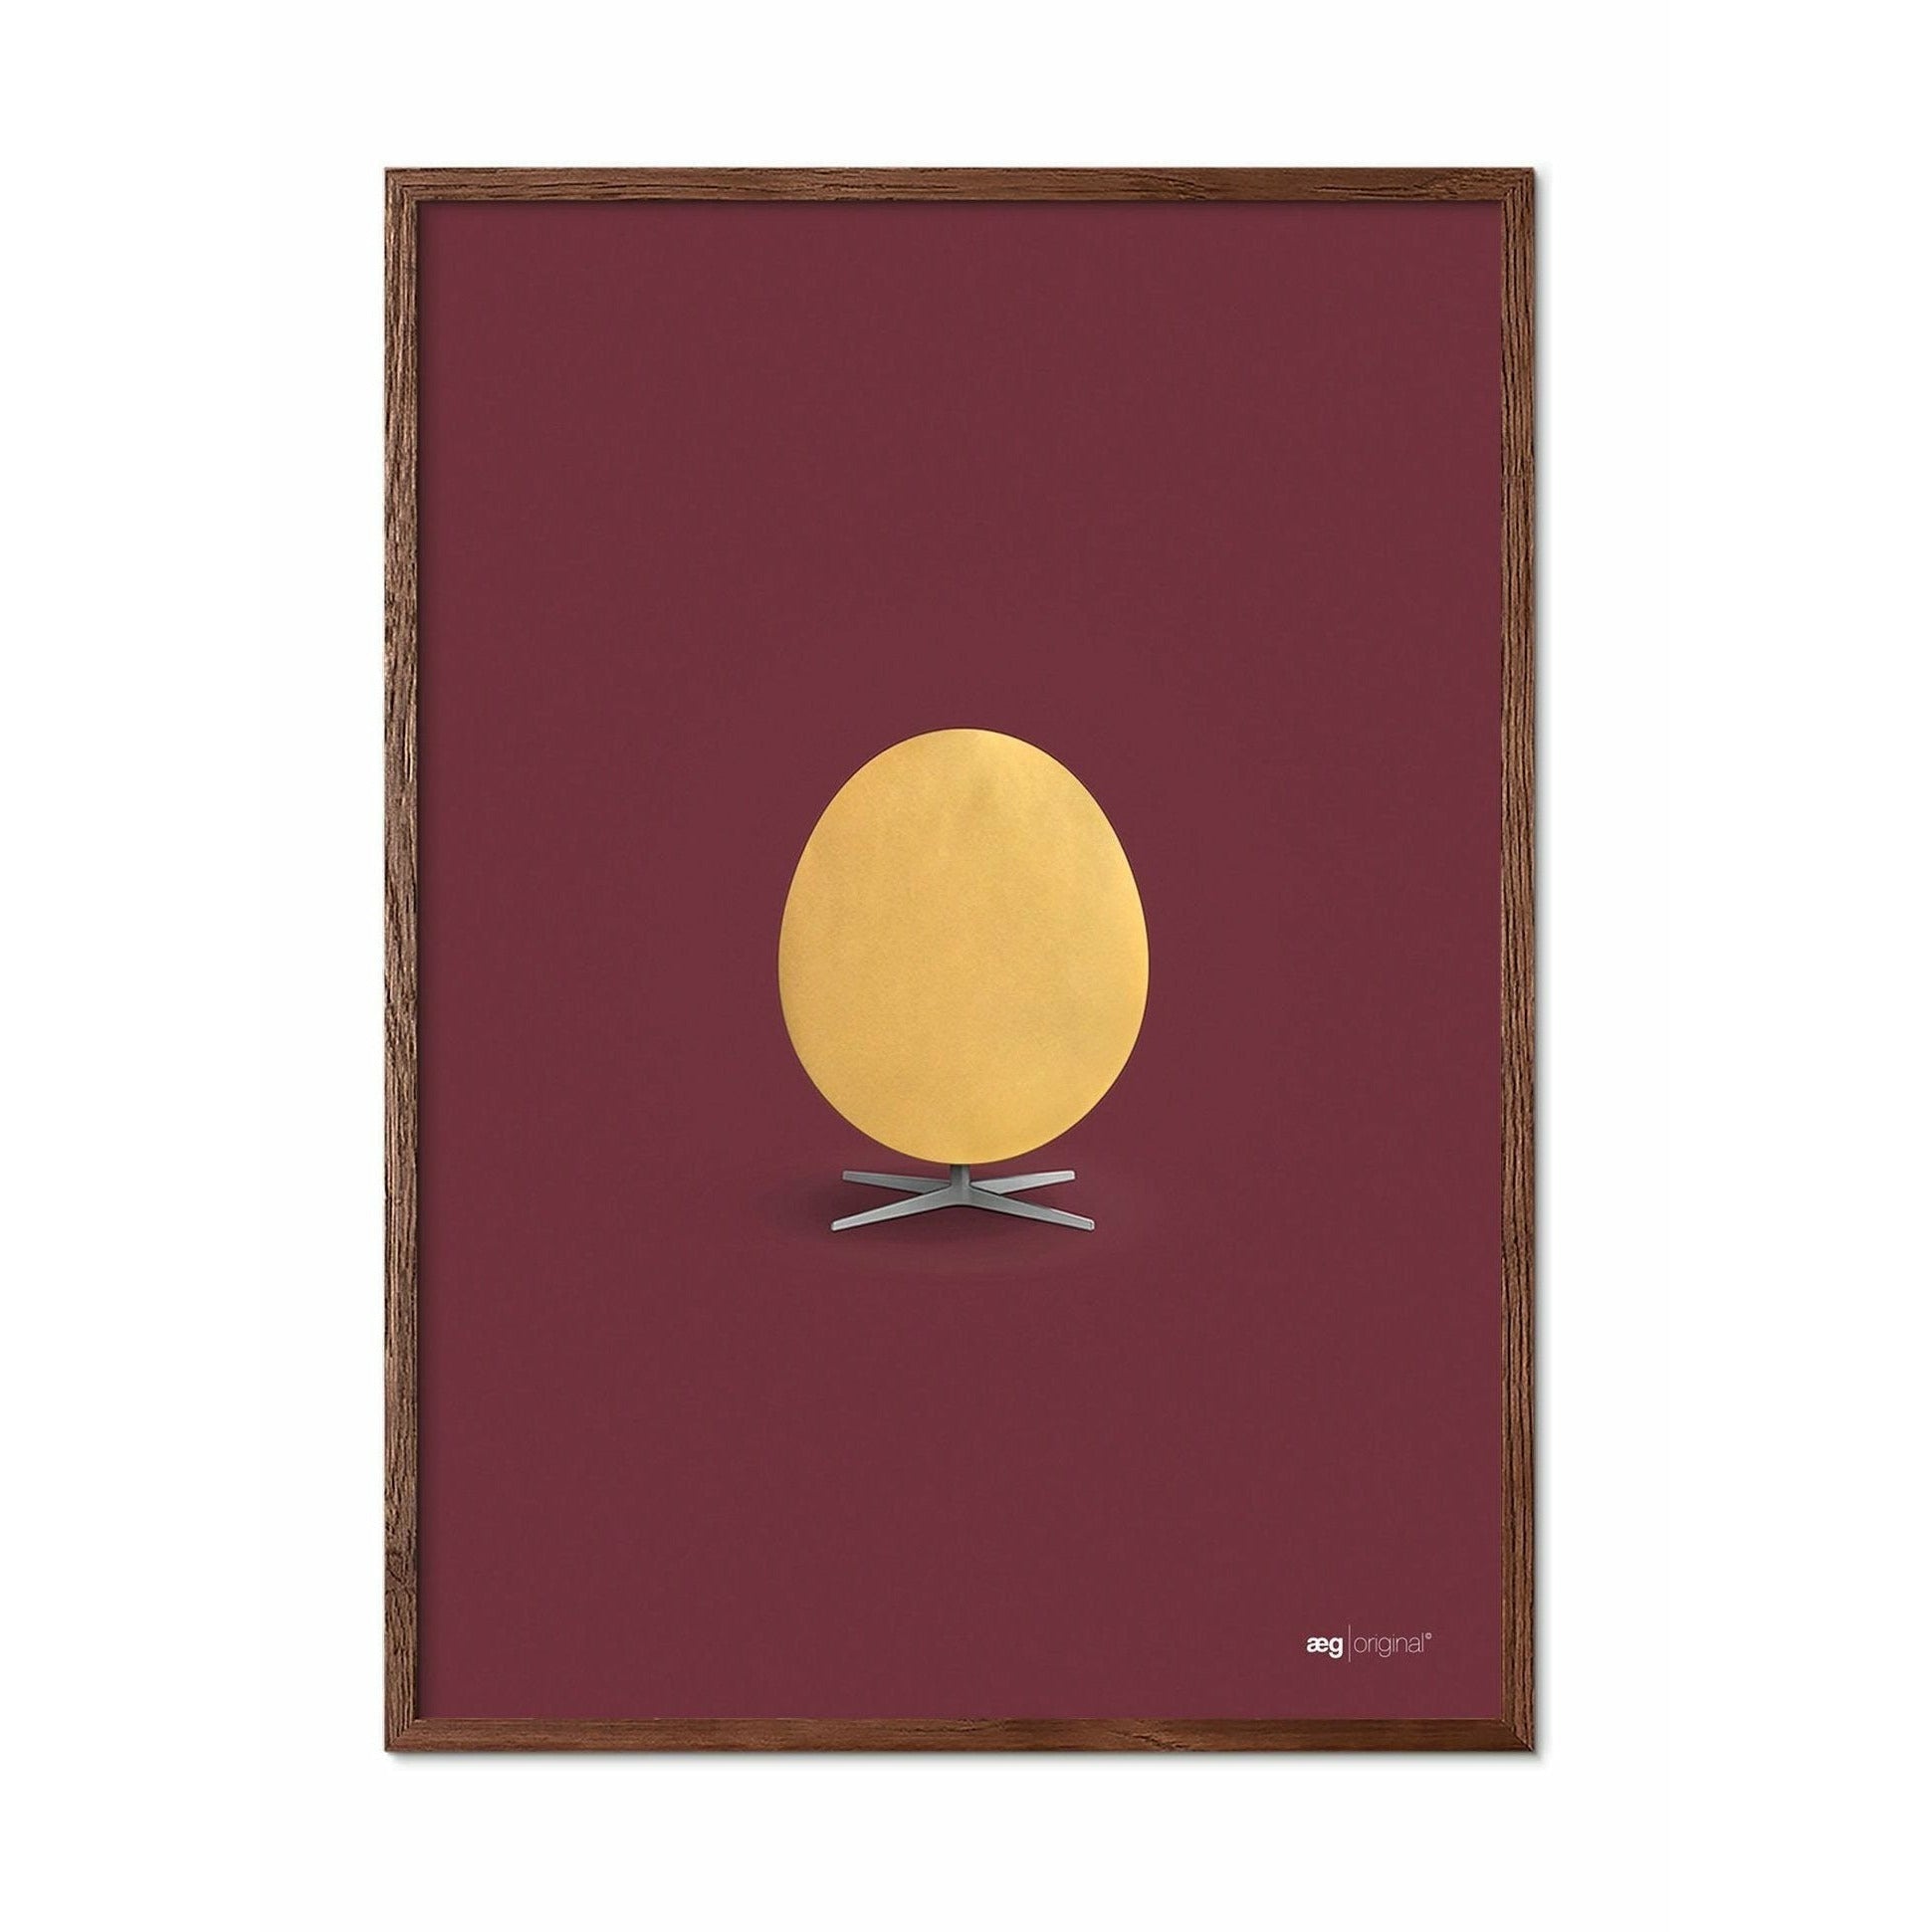 Brainchild Egg Poster, Dark Wood Frame A5, Gold/Bordeaux Background